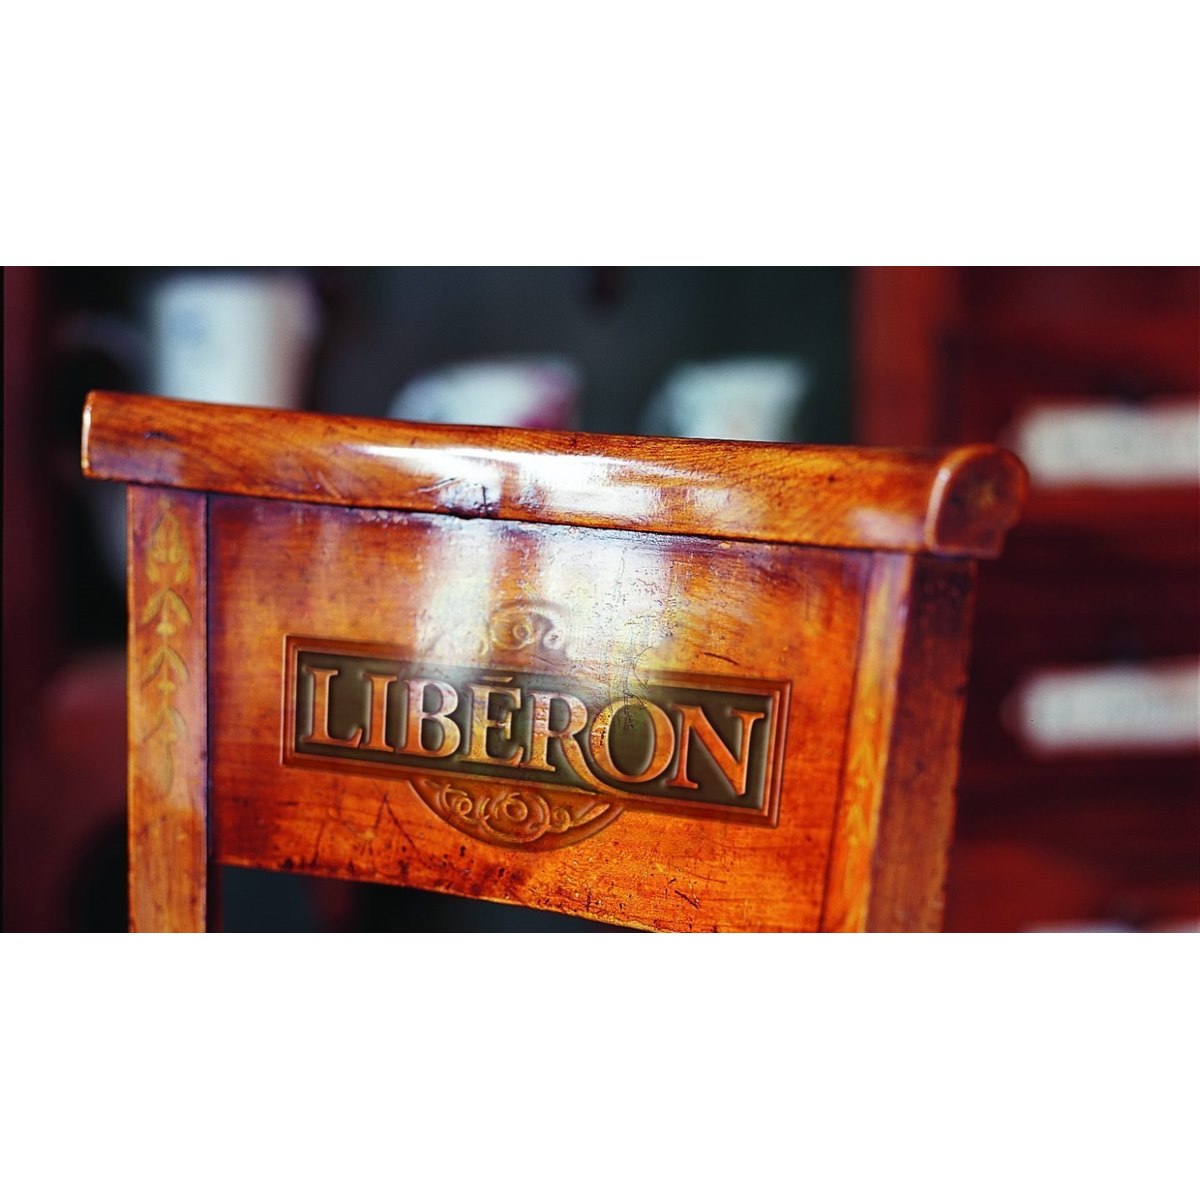 Where to buy Liberon Tung Oil